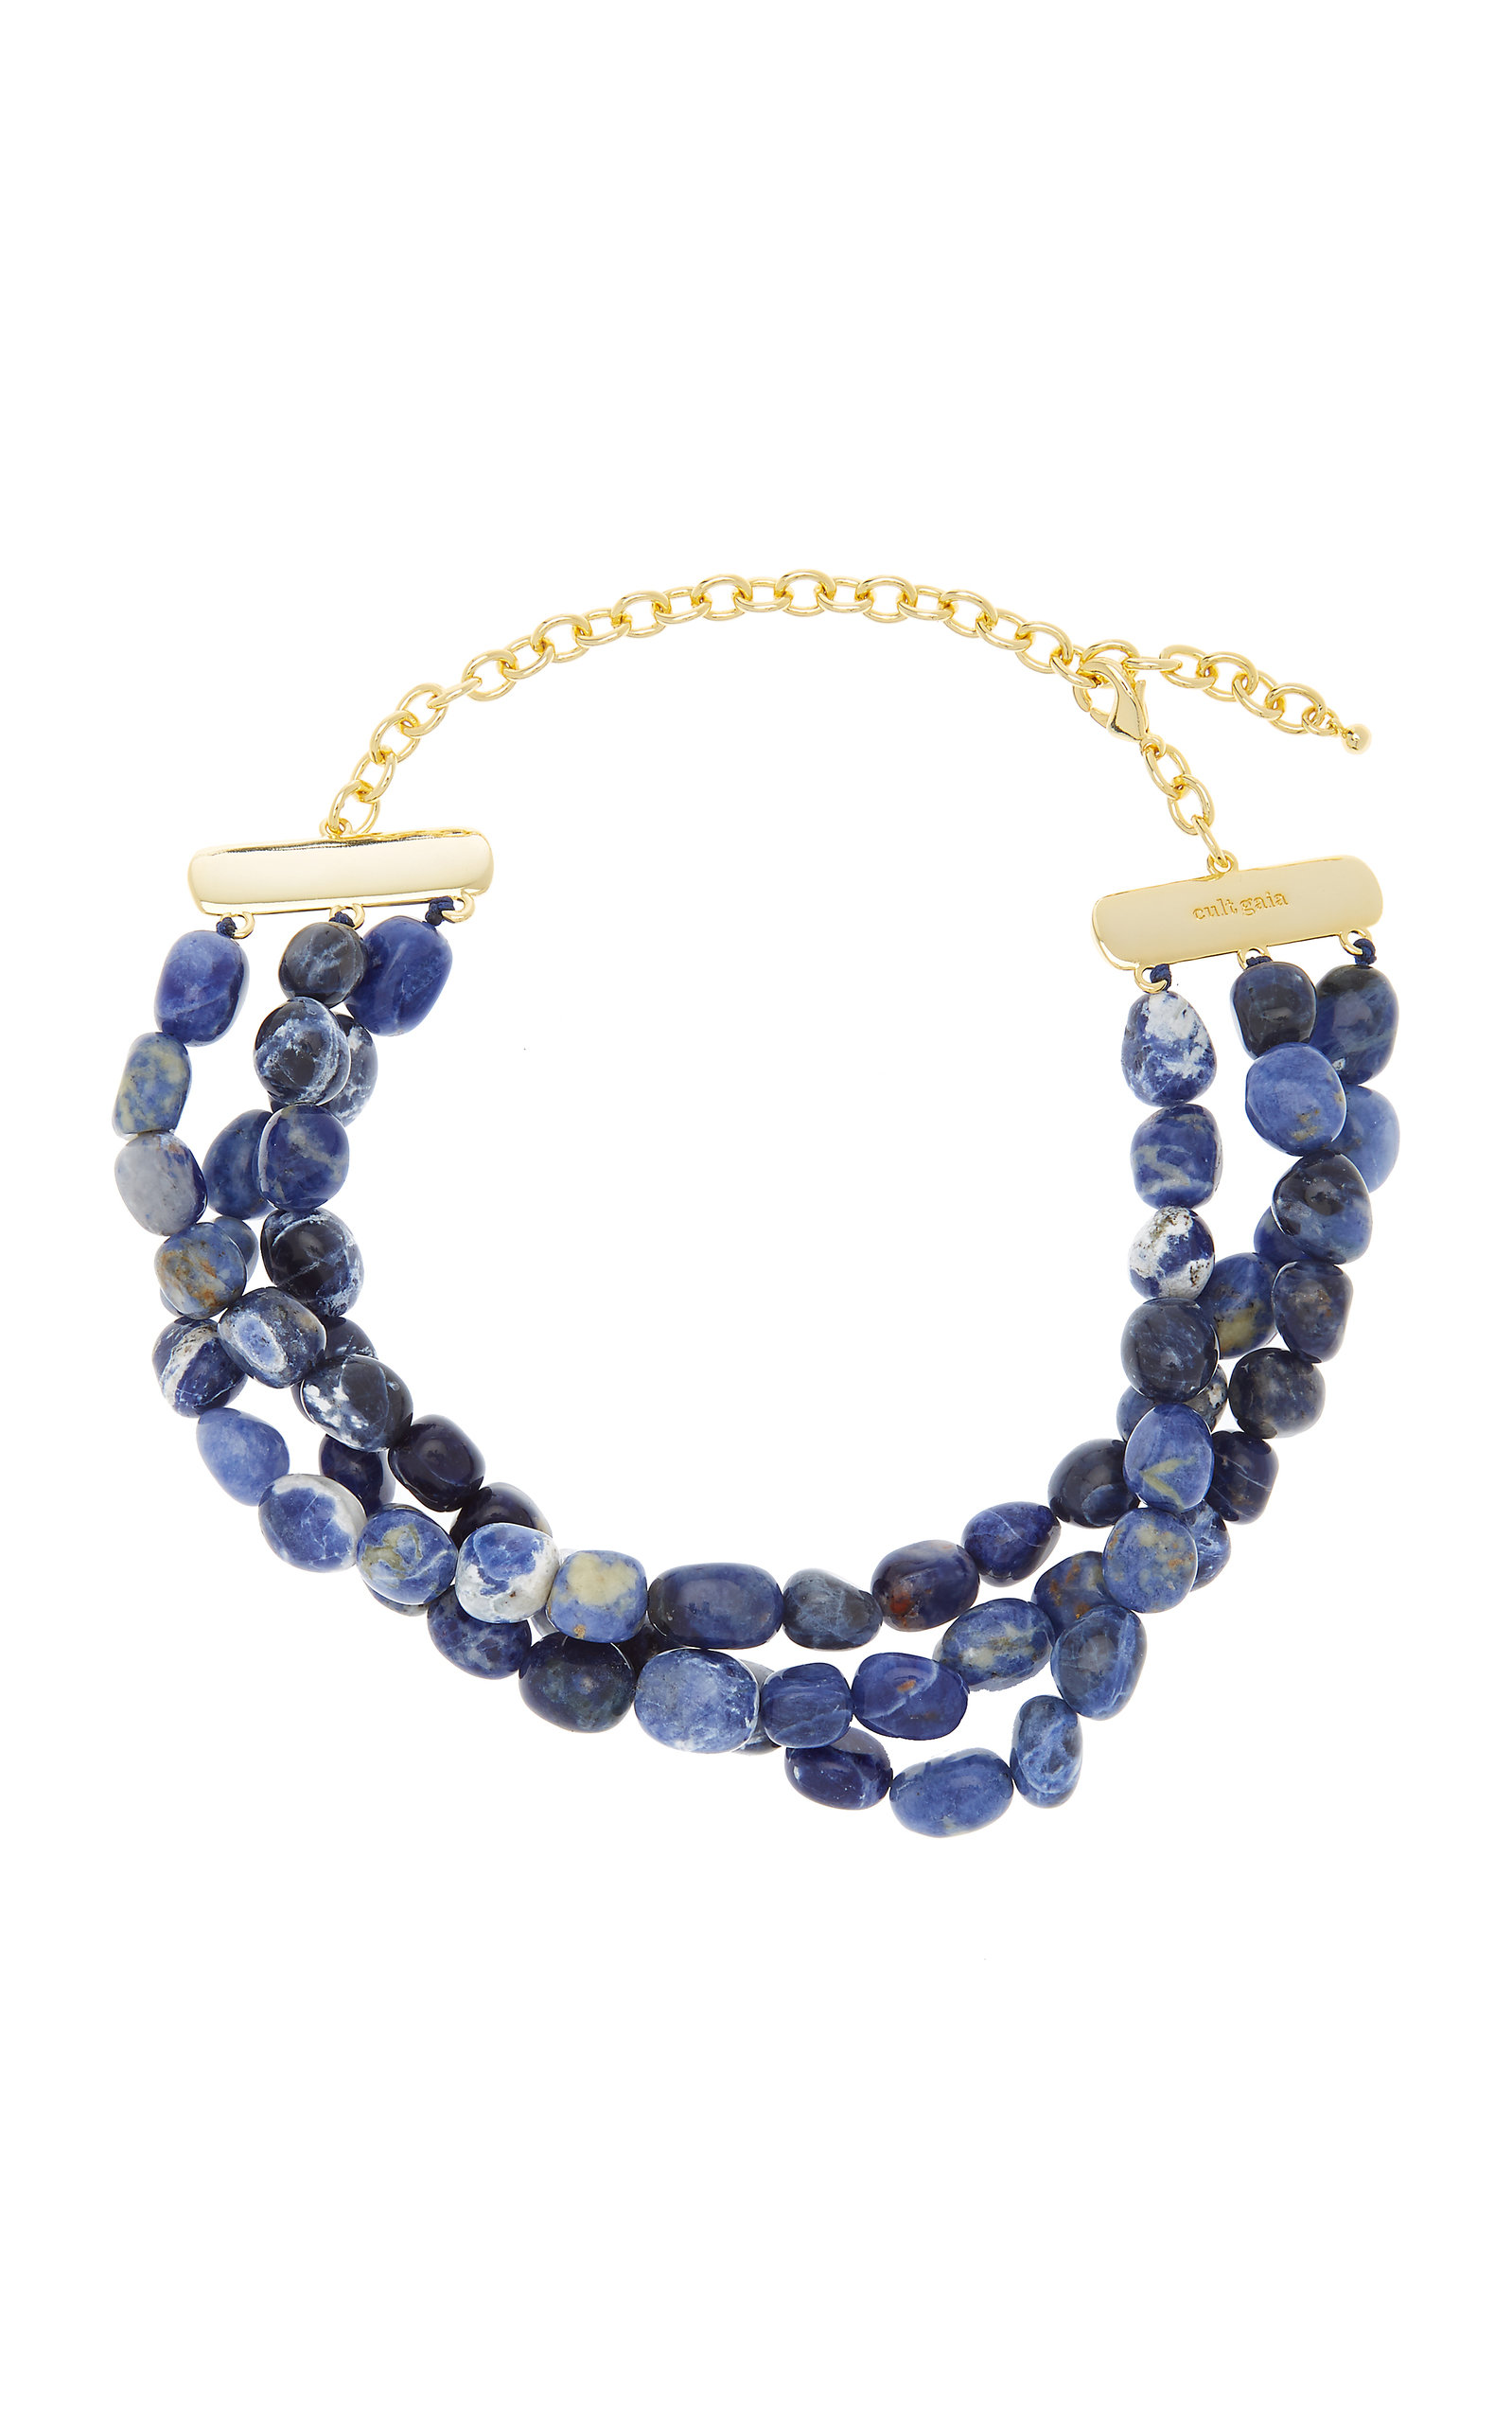 Cult Gaia - Women's Nora Sodalite Necklace - Blue - Moda Operandi - Gifts For Her